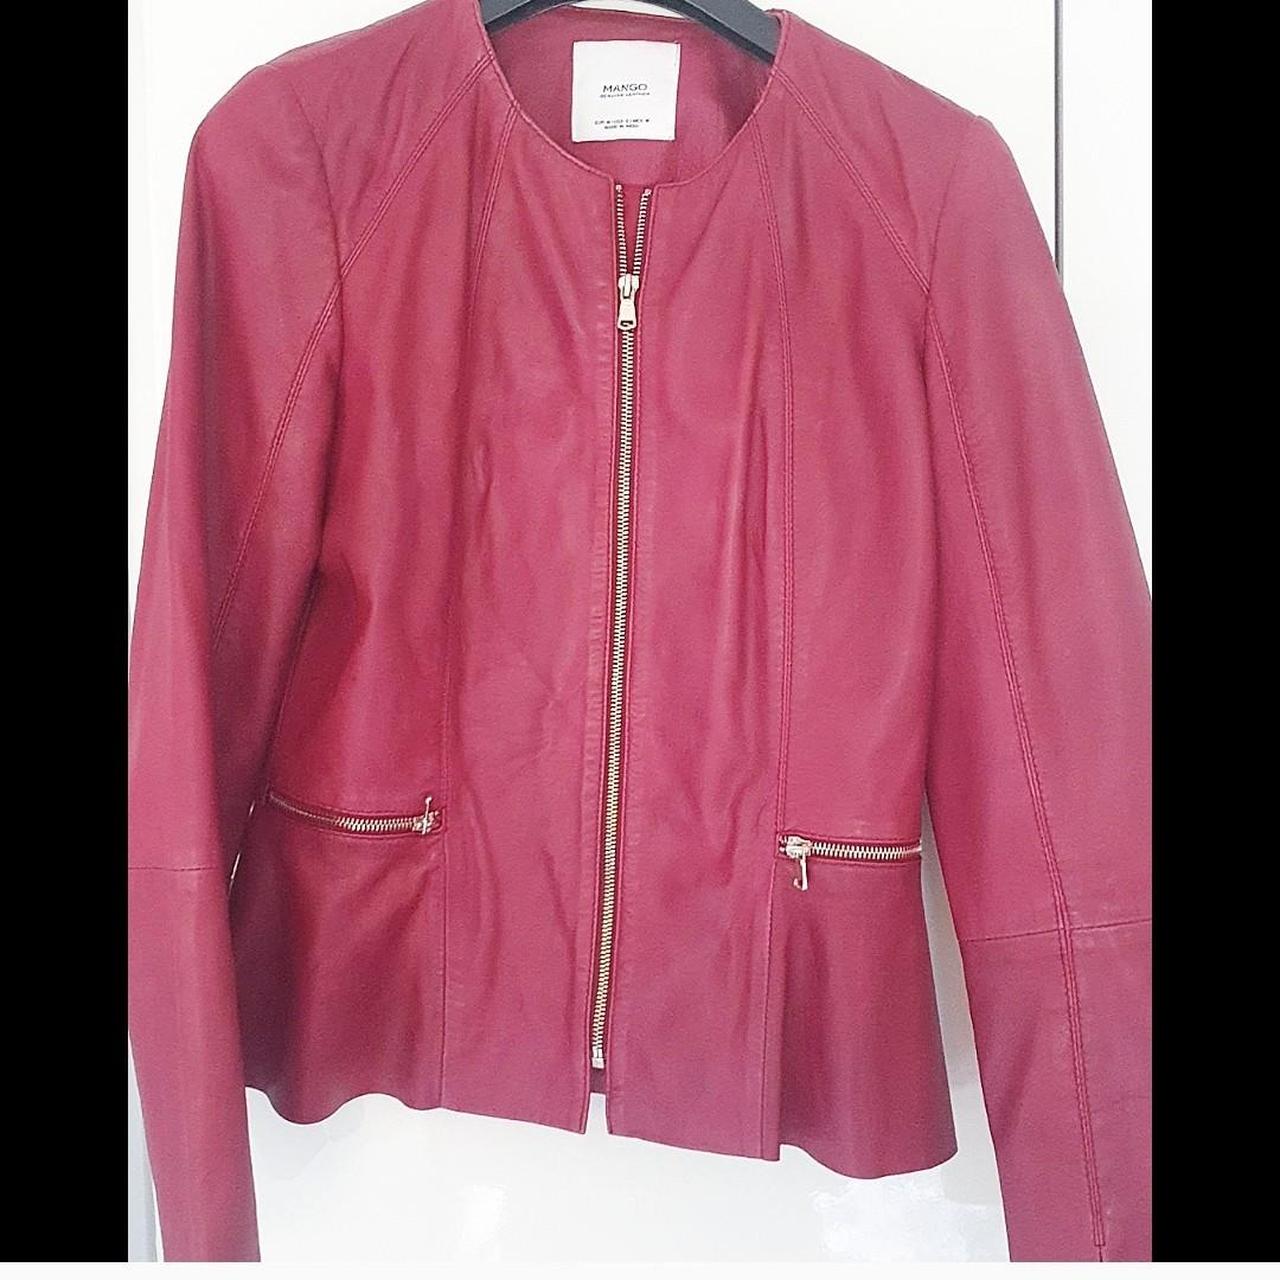 Mango genuine leather jacket In burgundy Worn a... - Depop